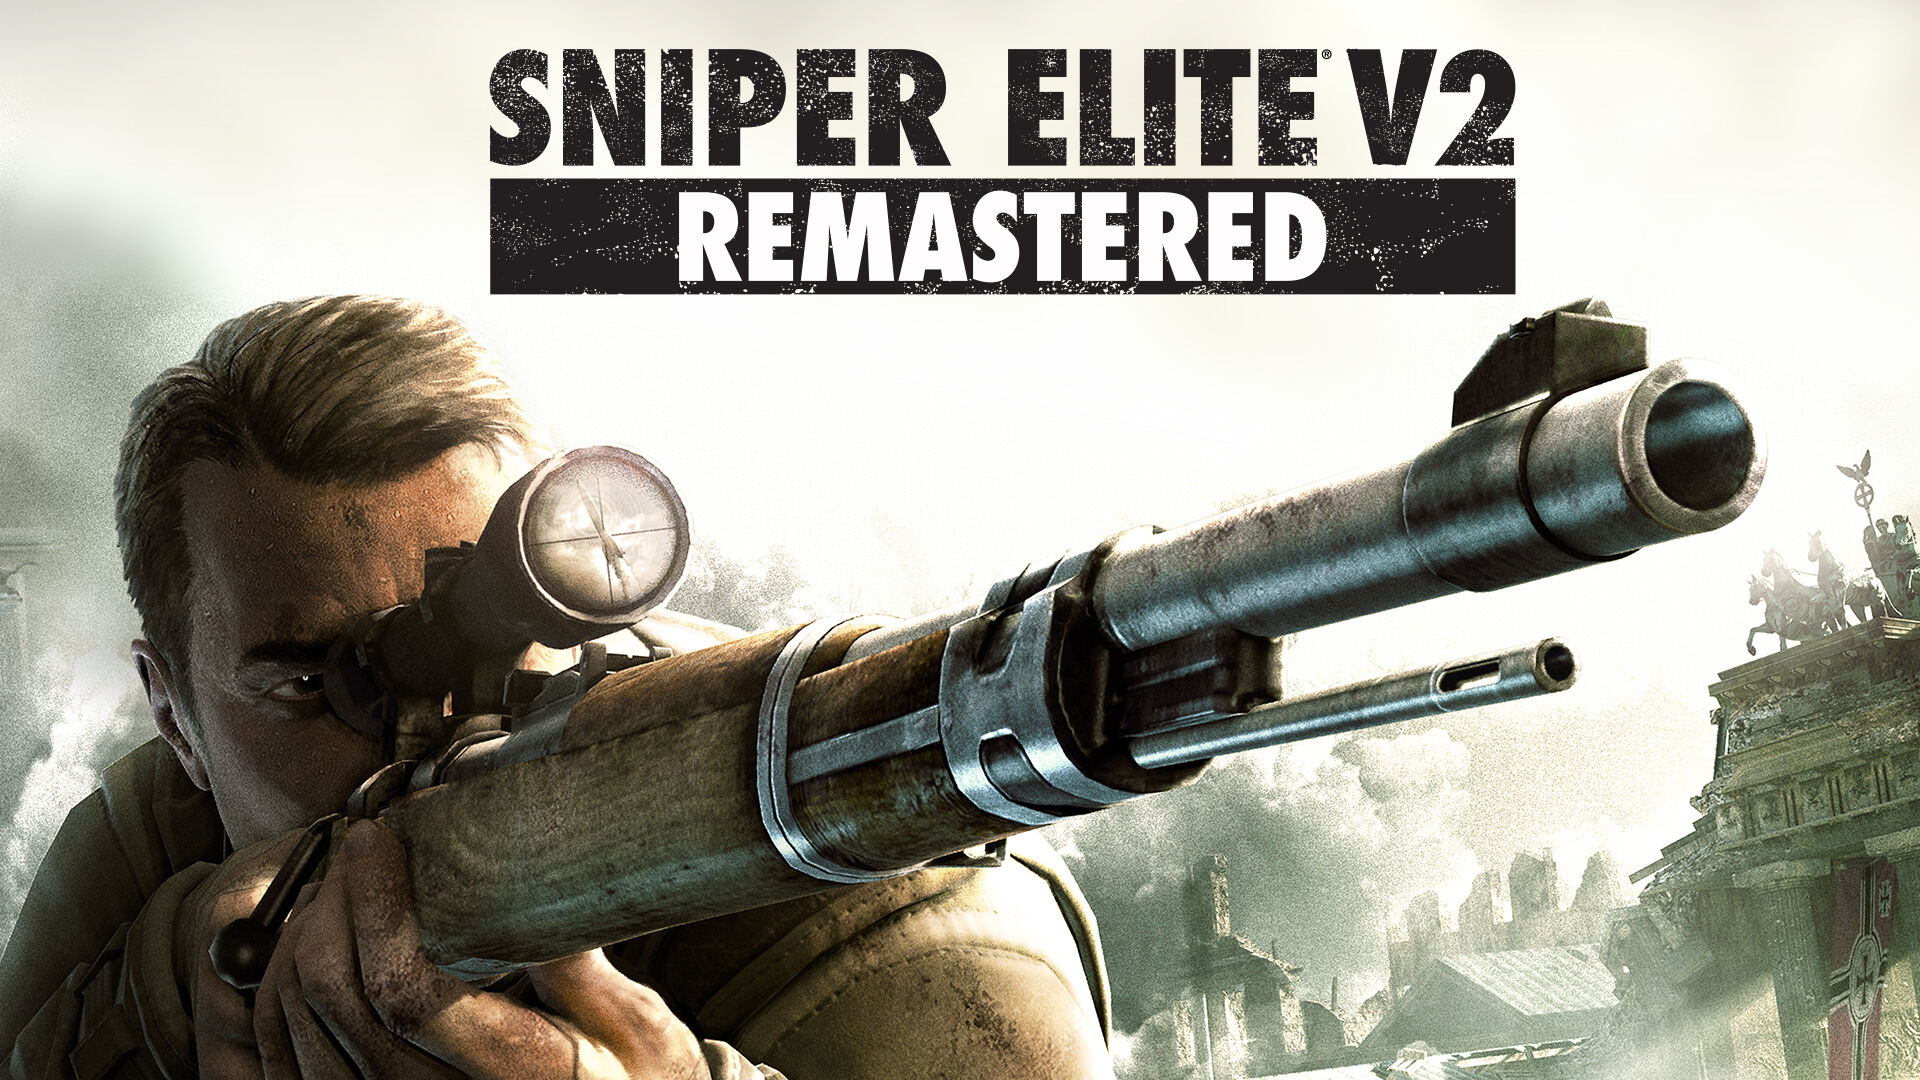 Sniper Elite V2 Remastered ダウンロード版 | My Nintendo Store 